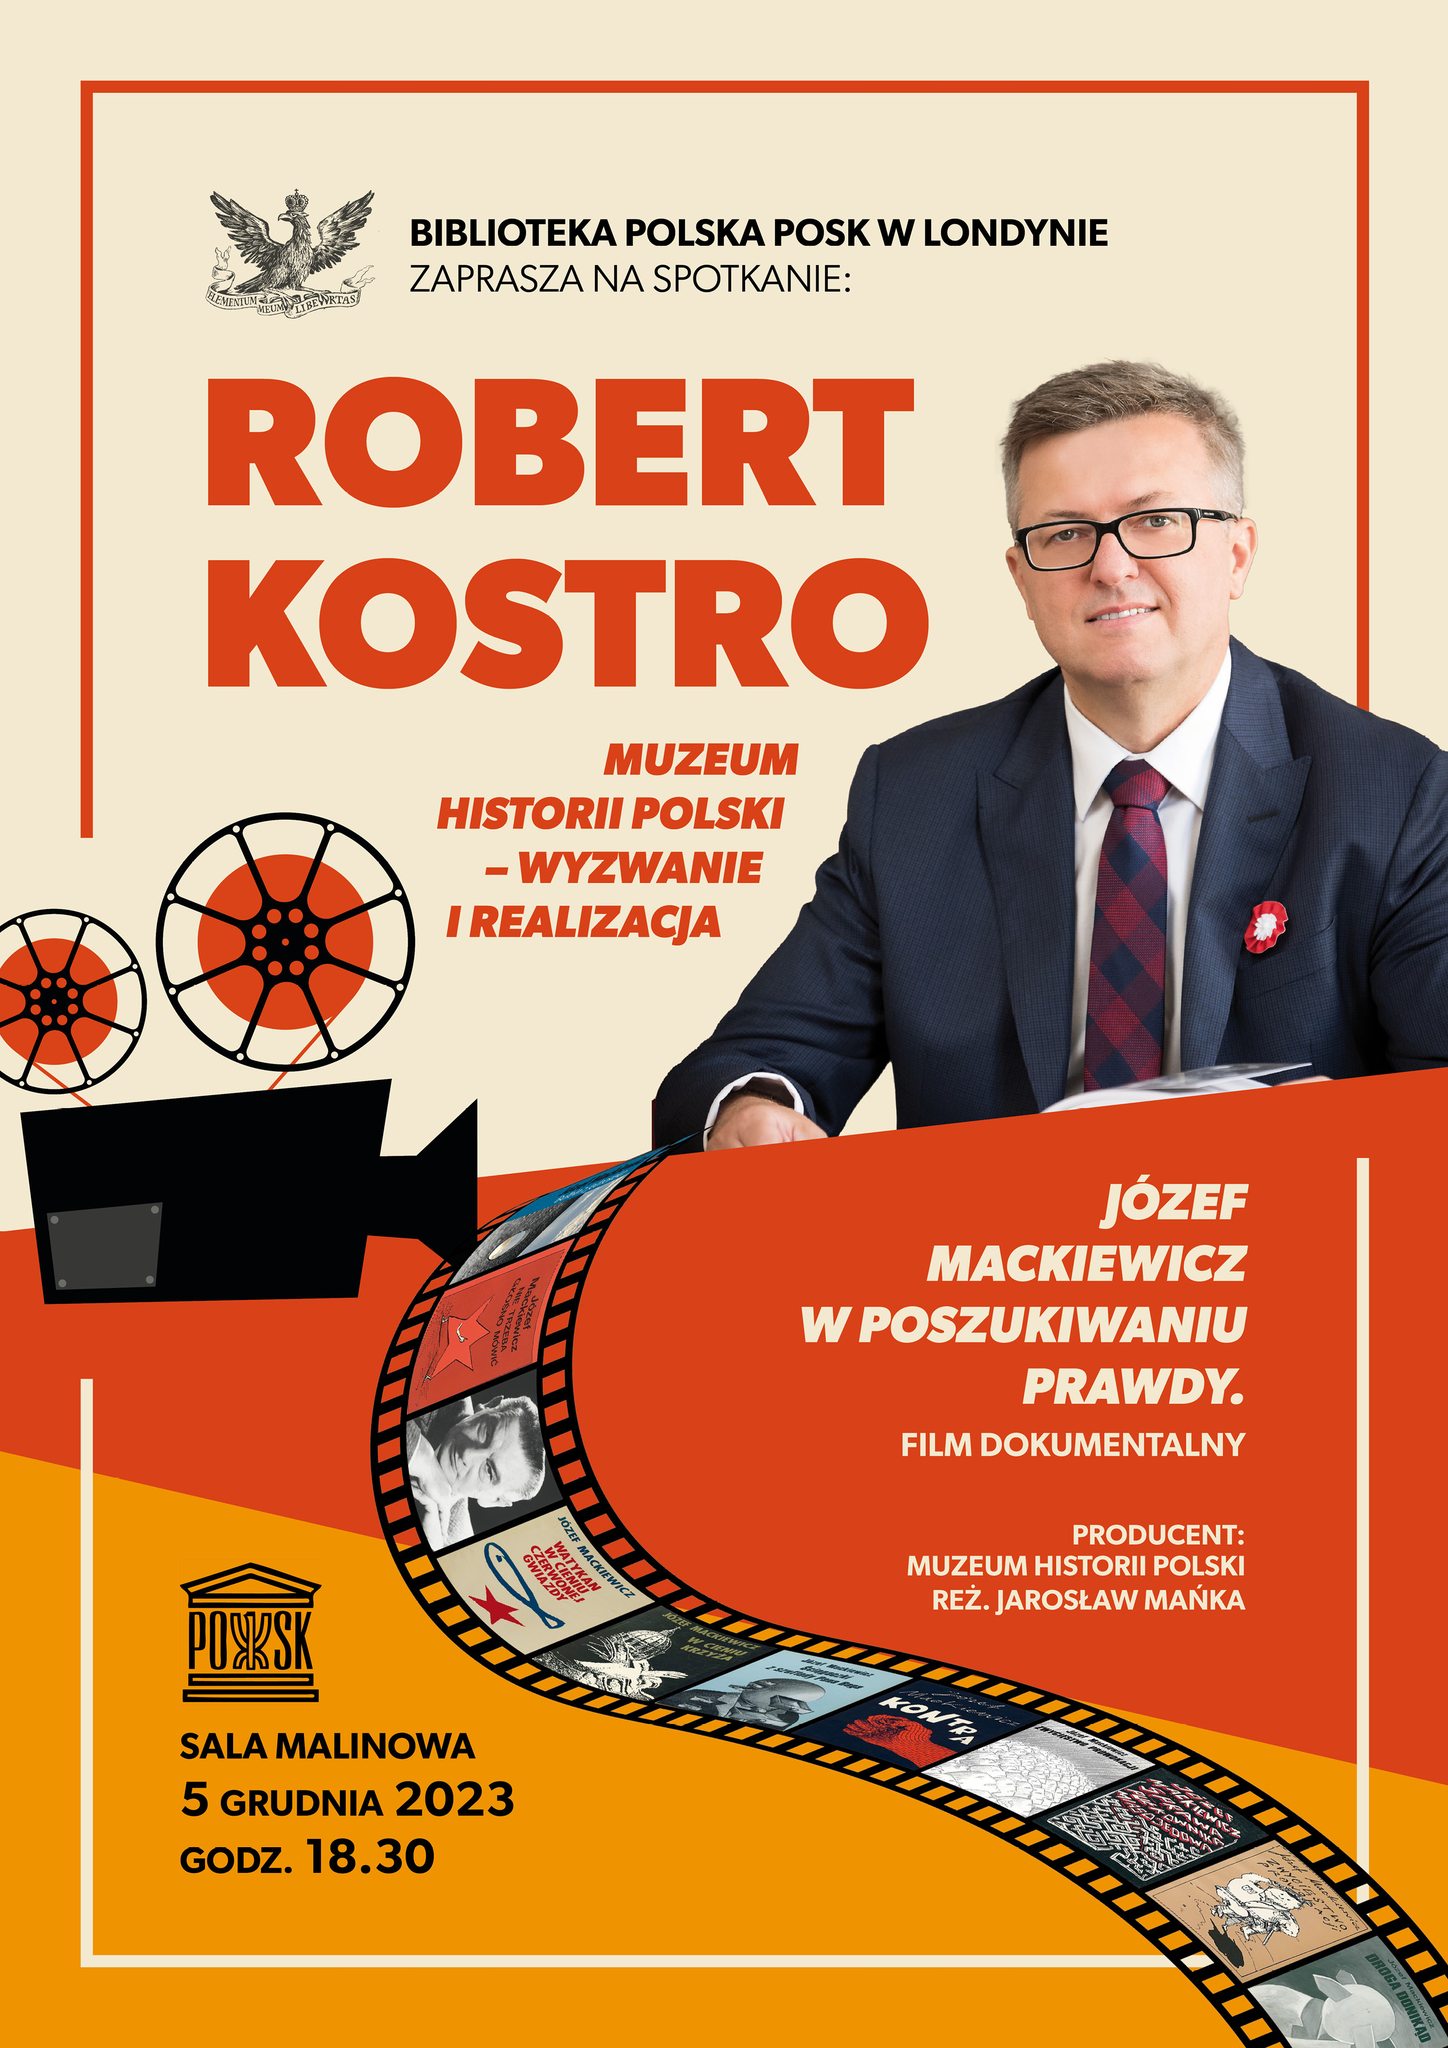 Spotkanie z Robertem Kostro z Muzeum Historii Polski